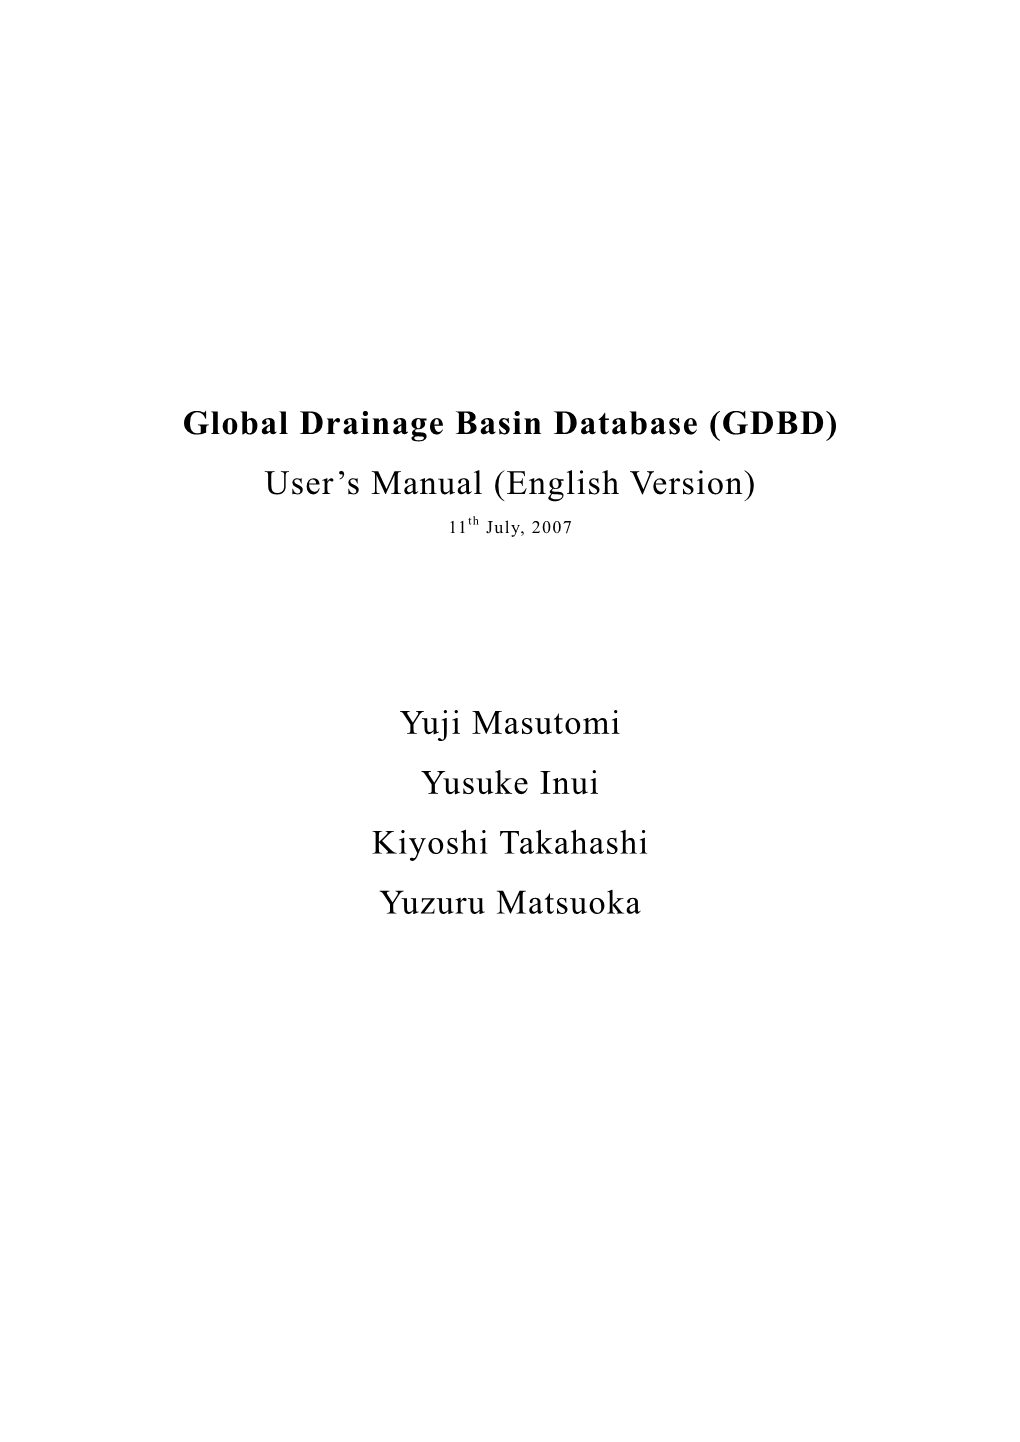 Global Drainage Basin Database (GDBD) User’S Manual (English Version) 11Th July, 2007